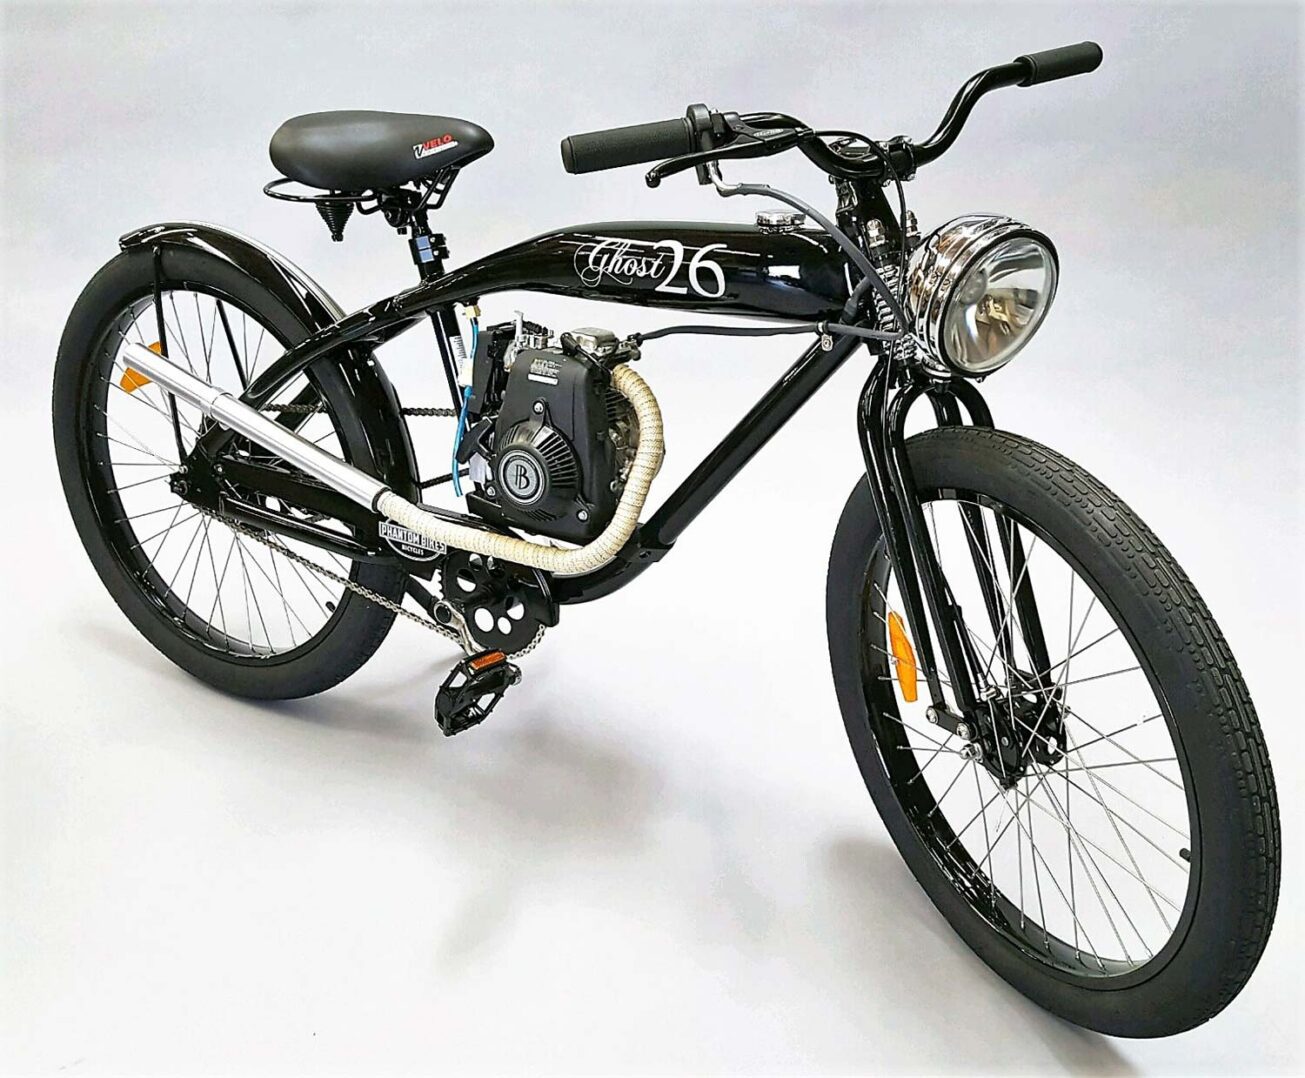 helio gas bikes useed